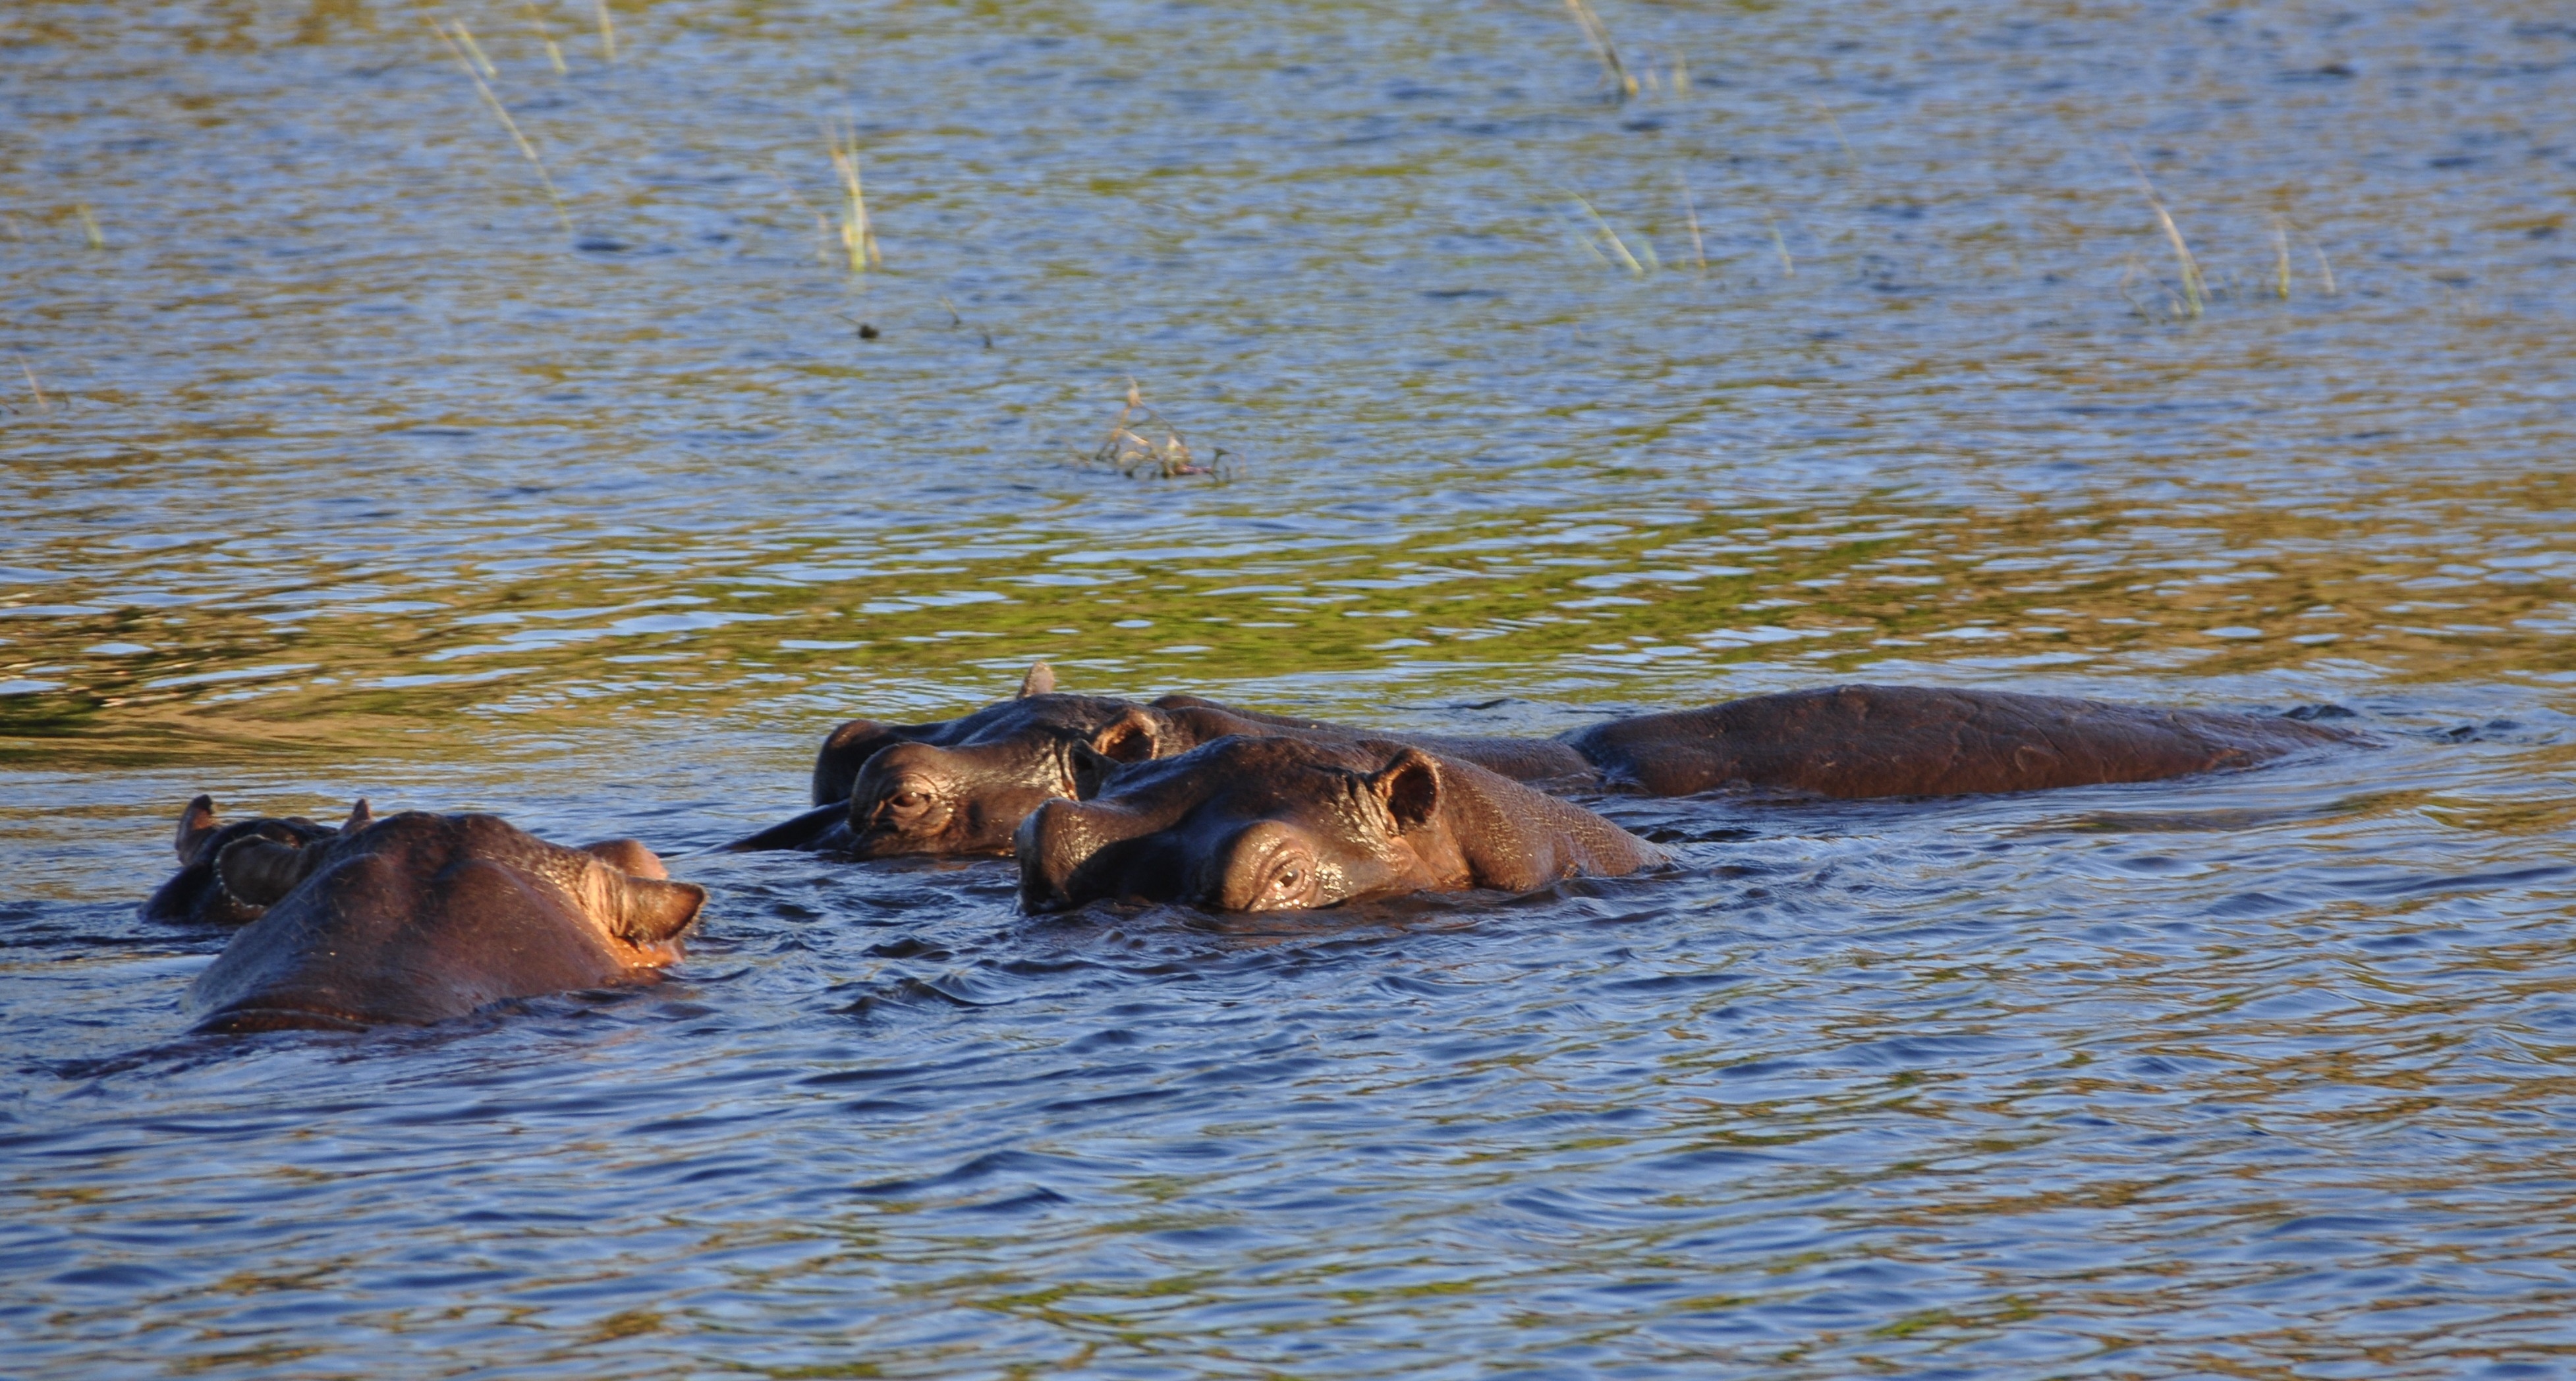 4 black hippopotamuses